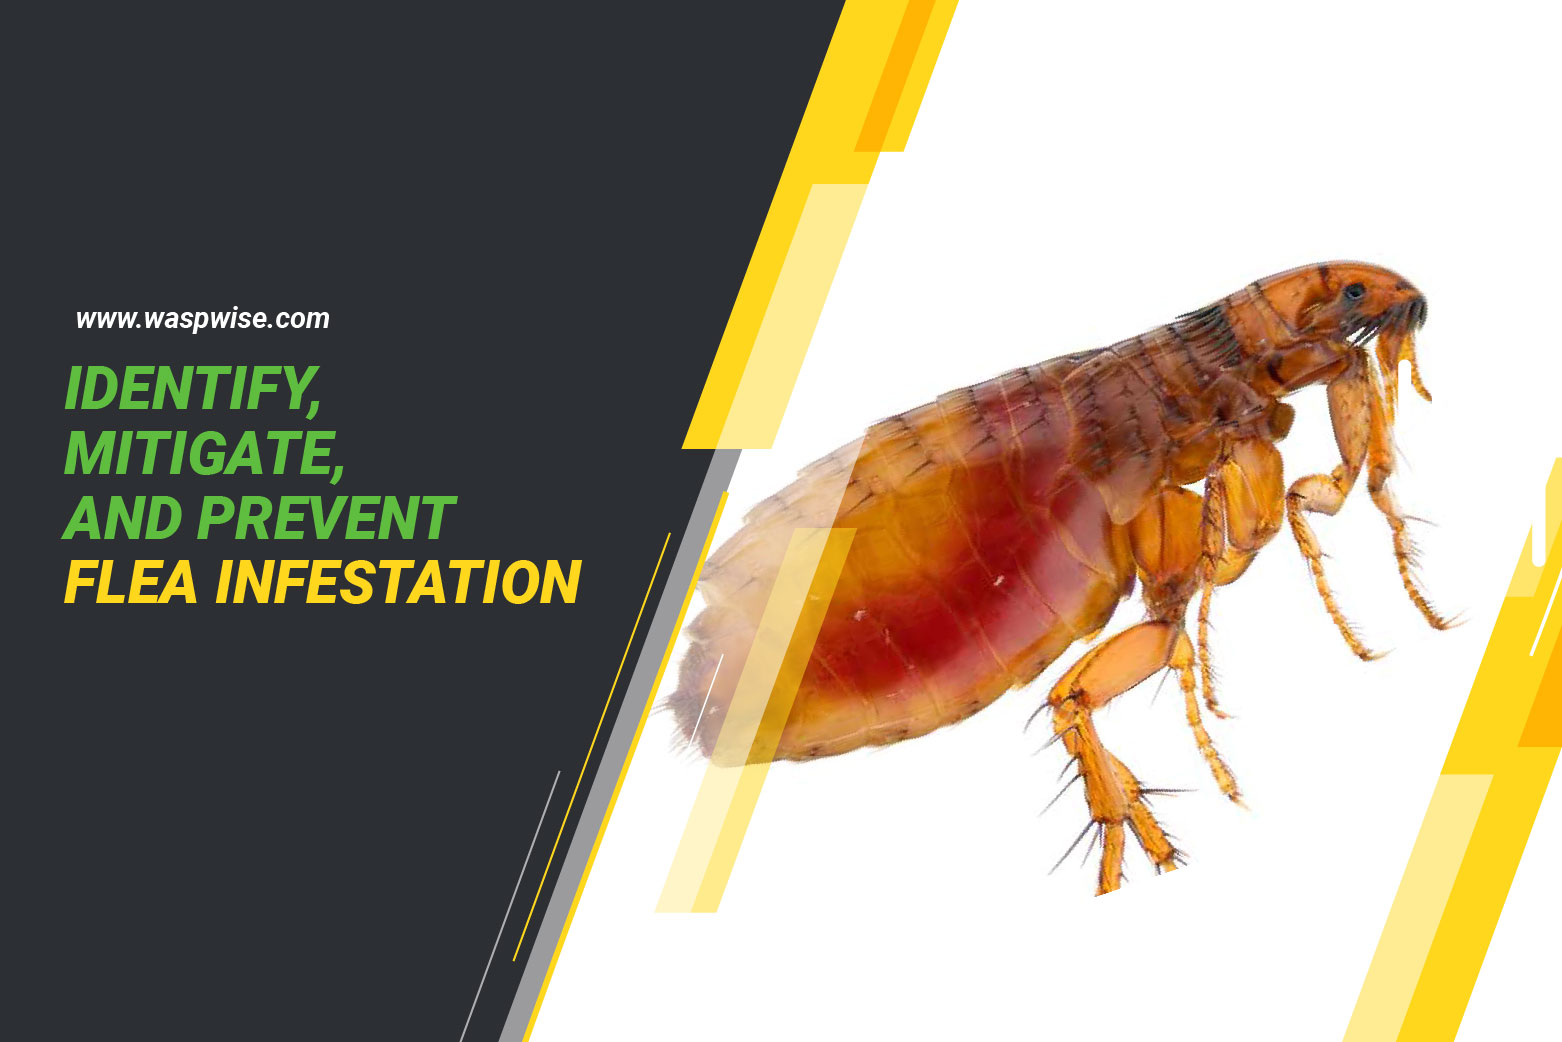 Identify, mitigate and treat flea infestation